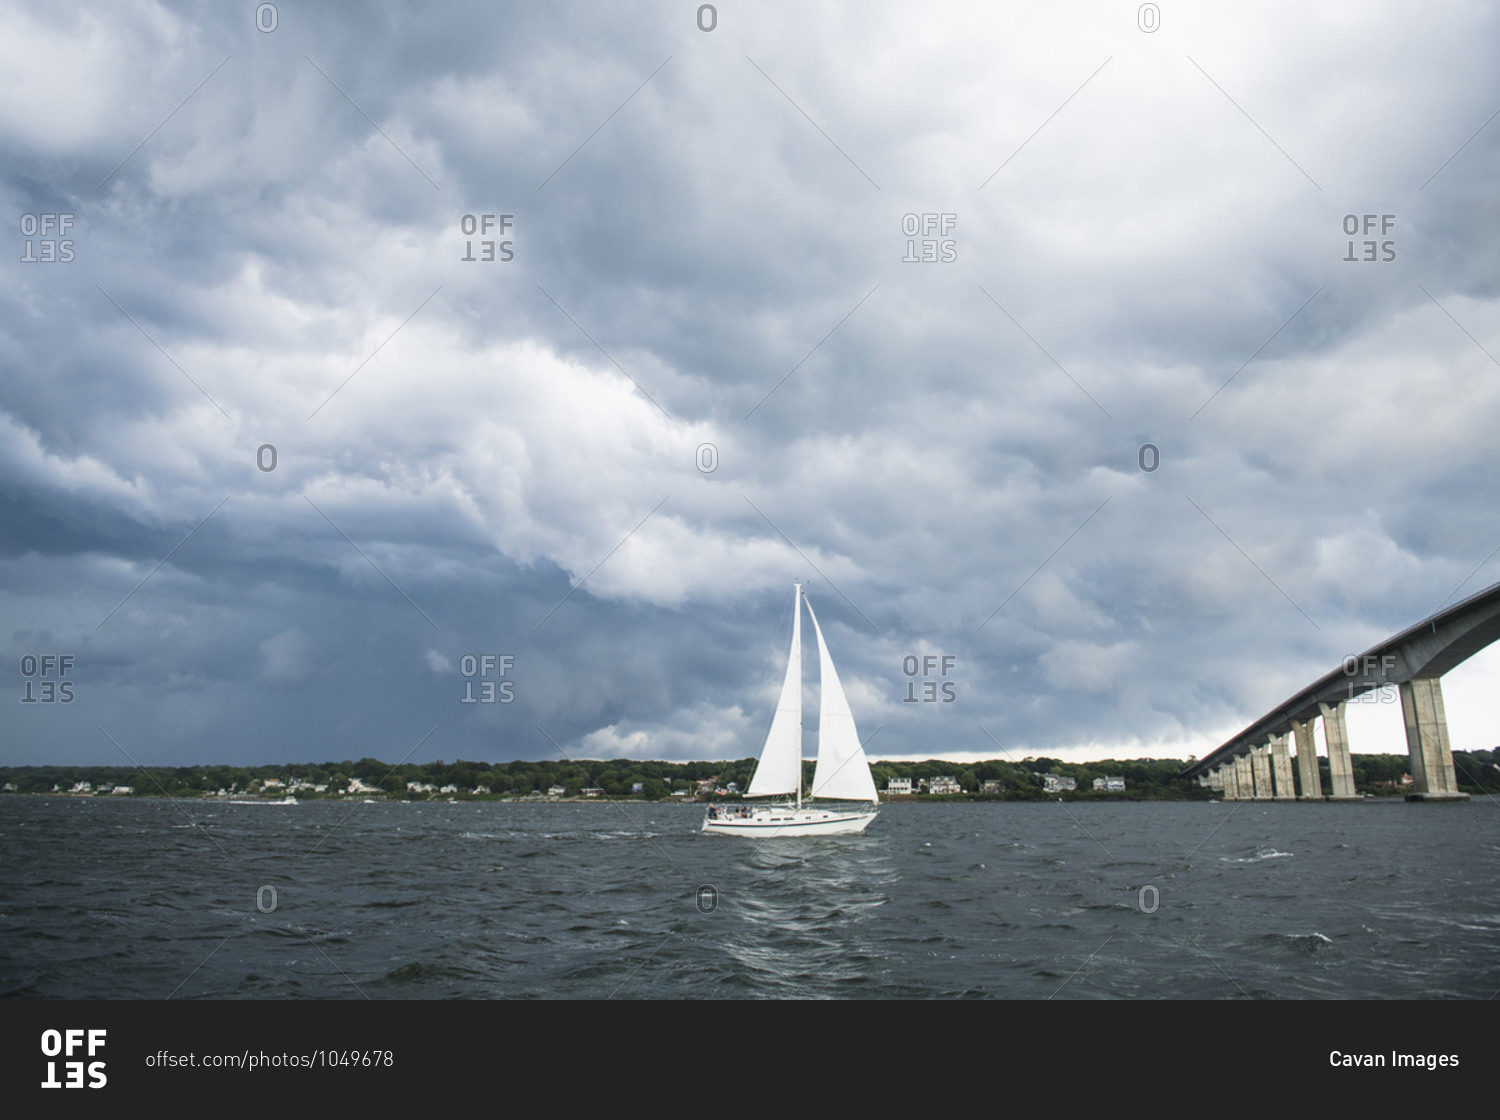 Dark storm encompassing boat on the ocean stock photo -\
OFFSET